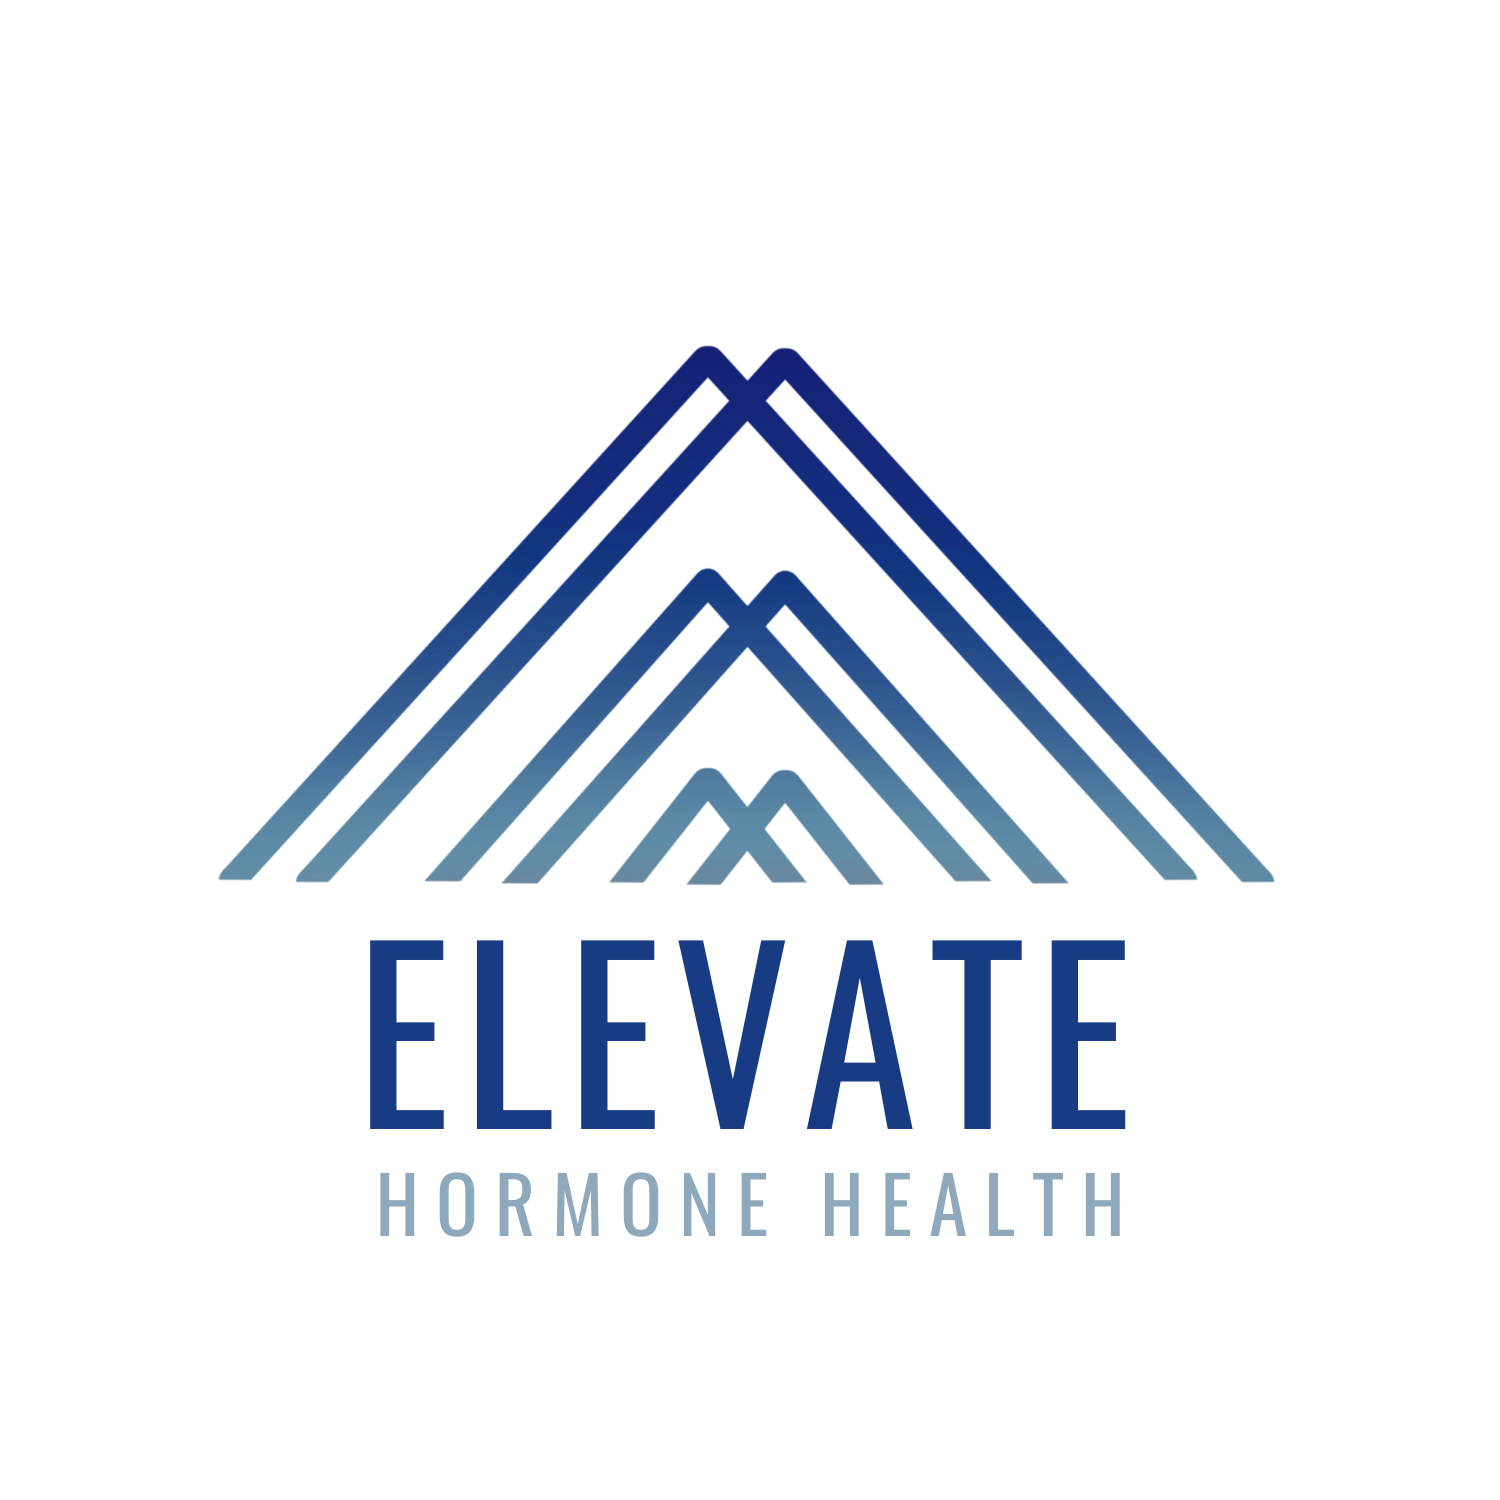 Elevate hormones logo